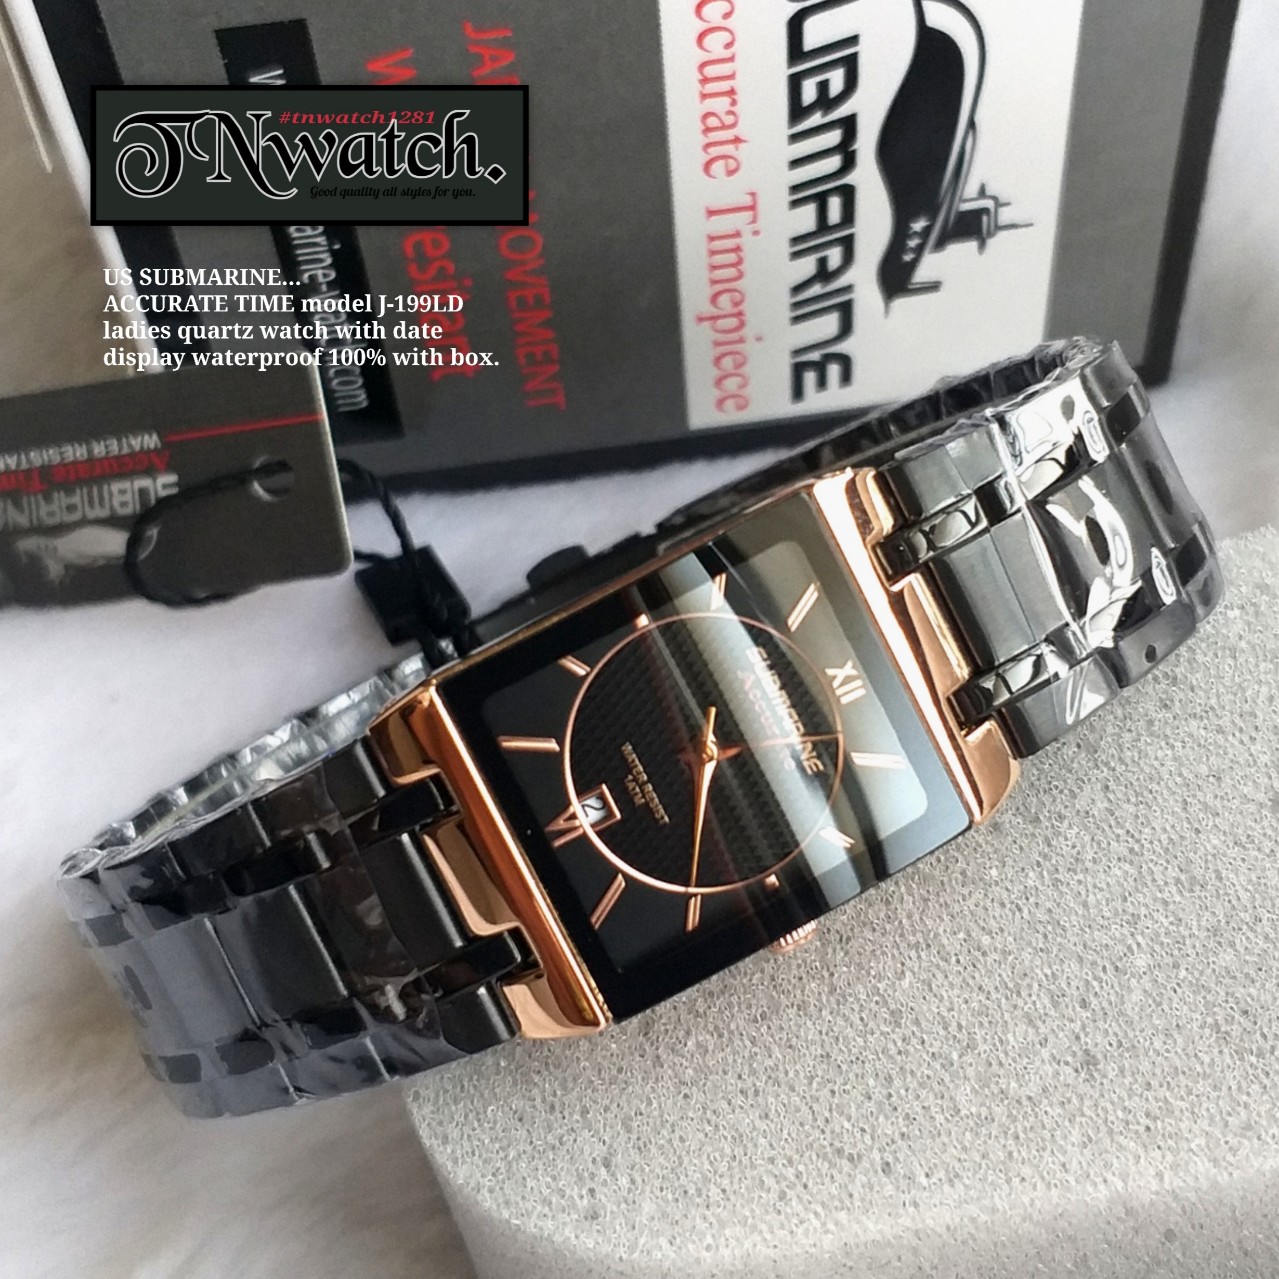 US SUBMARINE Accurate Time รุ่น J-199LD นาฬิกาข้อมือผู้หญิง ระบบควอทซ์ แสดงวันที่ กันน้ำ100% พร้อมกล่อง ร้านขายนาฬิกาtnwatch1281